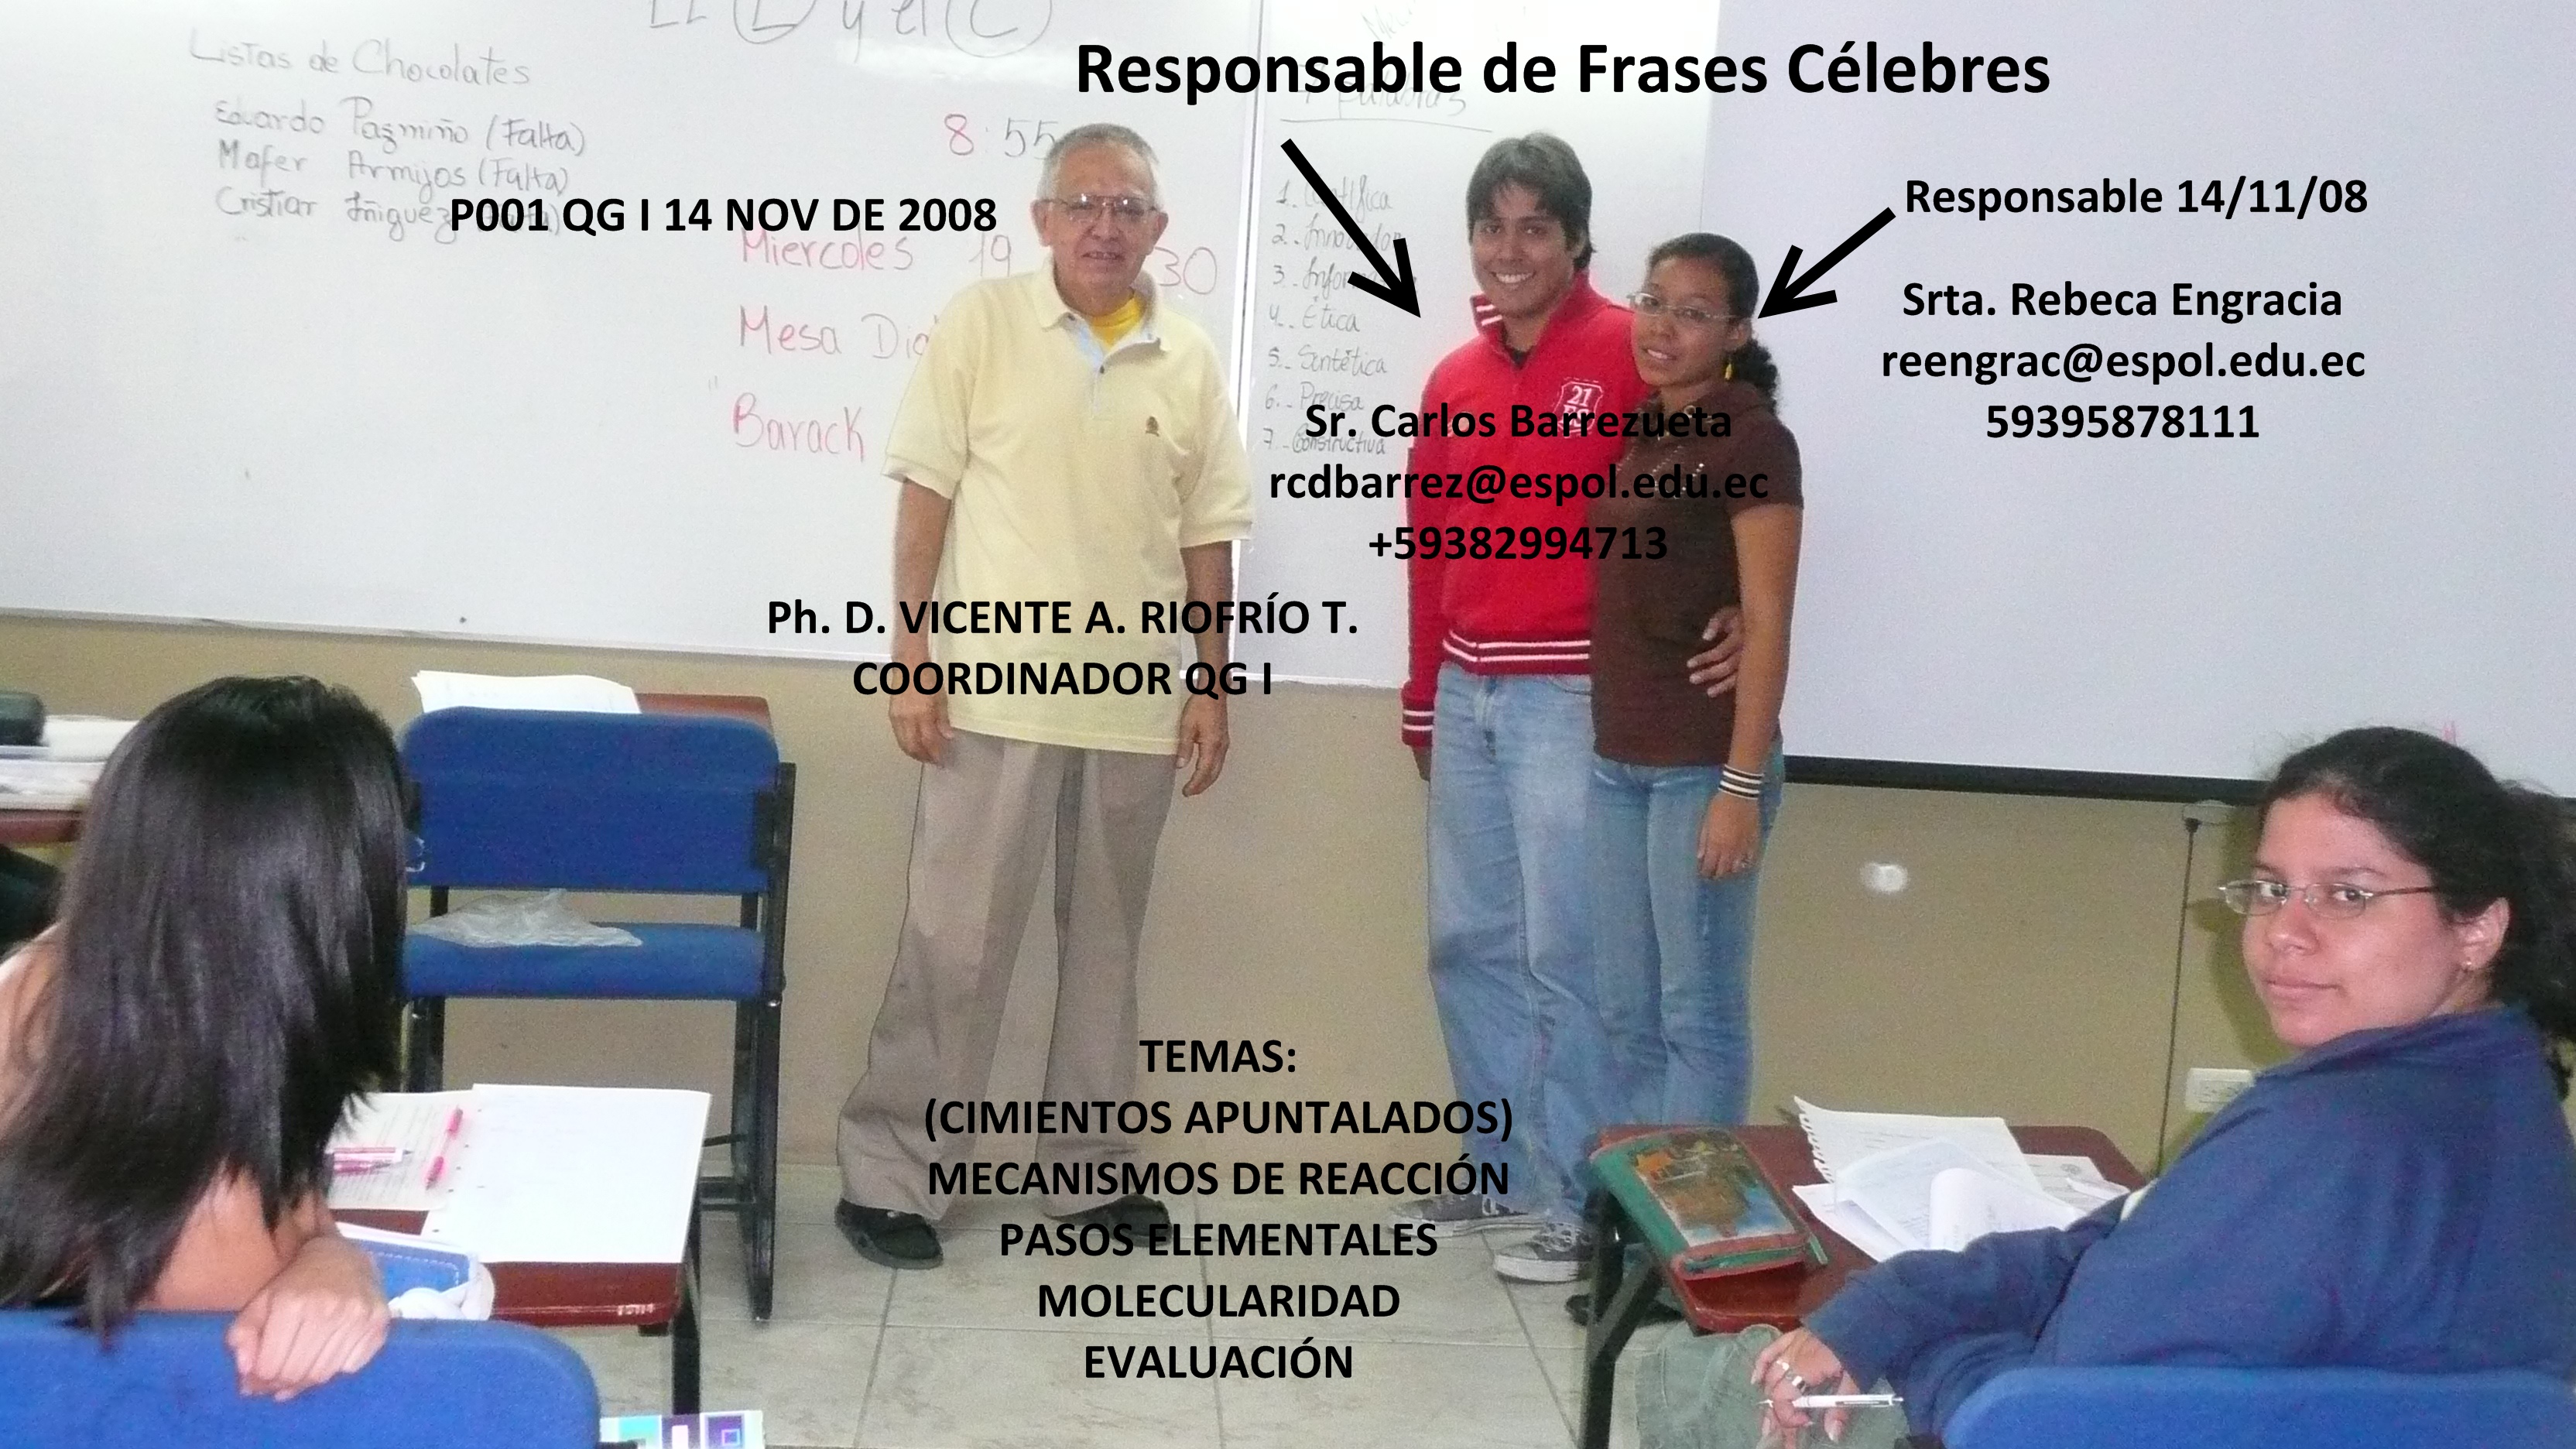 Responsable 14/11/08 Srta. Rebeca Engracia, Responsable de Frases Célebres Sr. Carlos Barrezueta